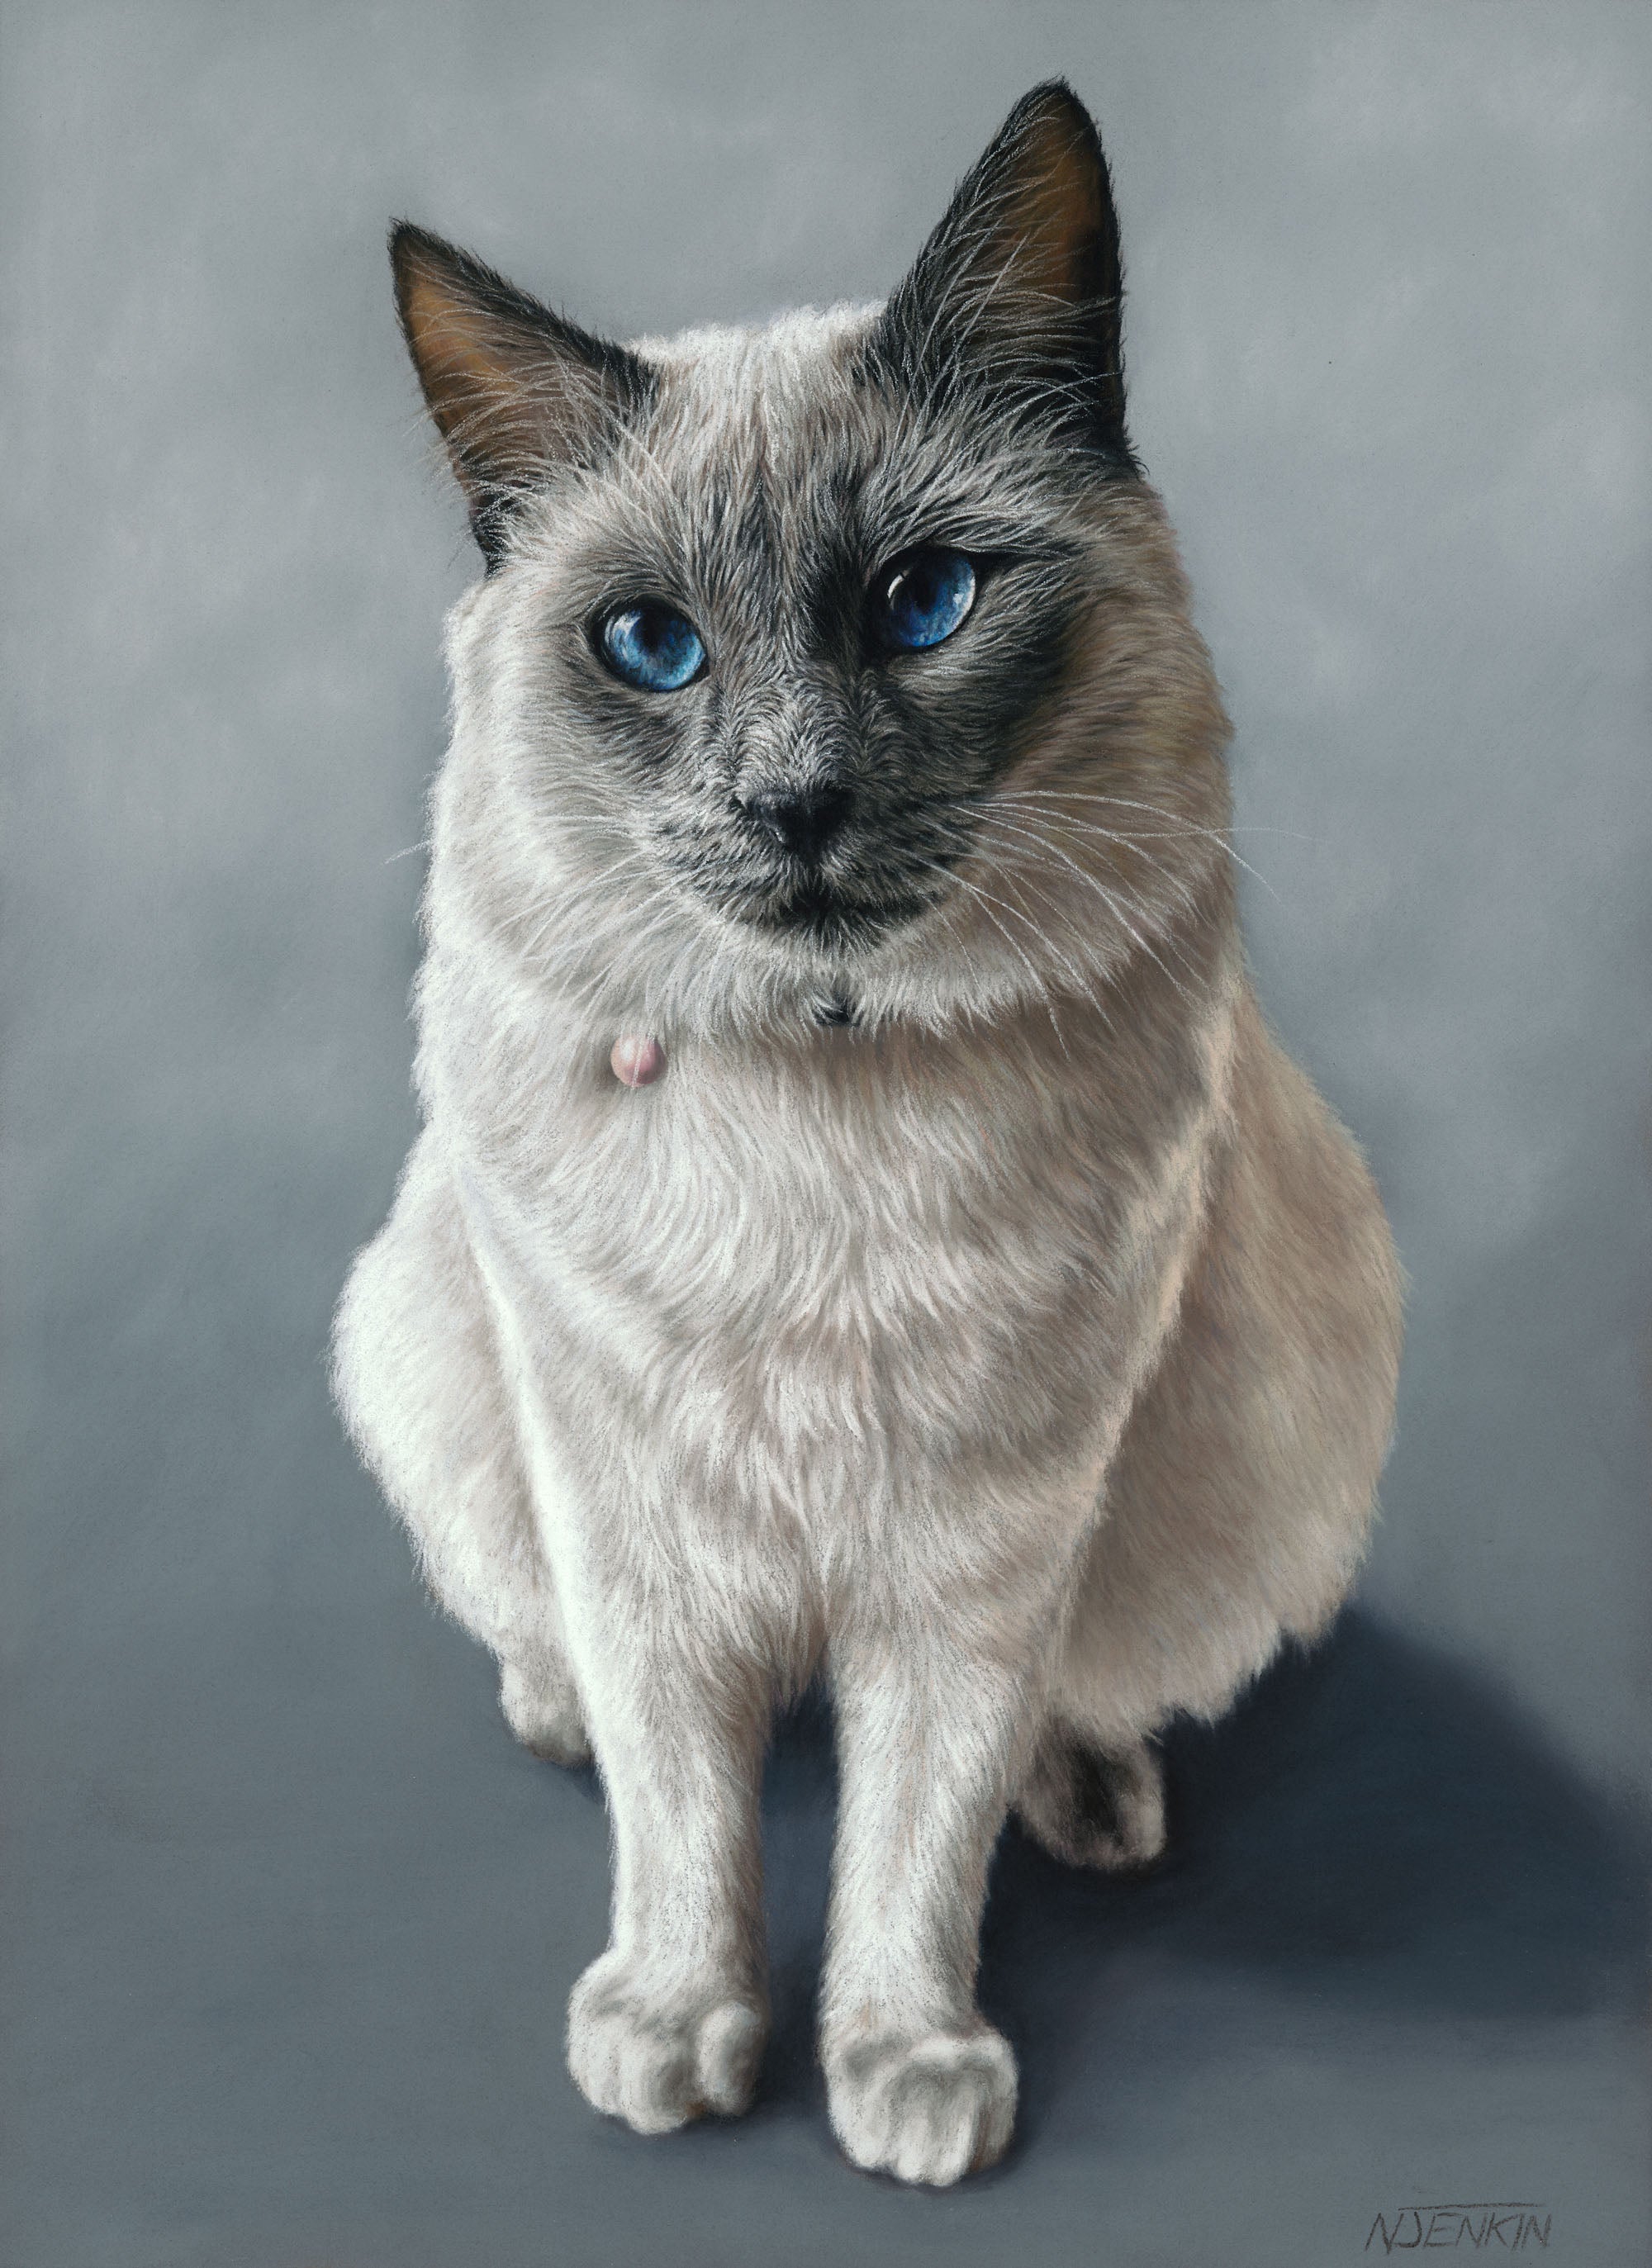 Naomi Jenkin Art - Stewy Cat Portrait.jpg__PID:03ecbc7c-9afb-48e3-ac9e-97fdd7a53c8d